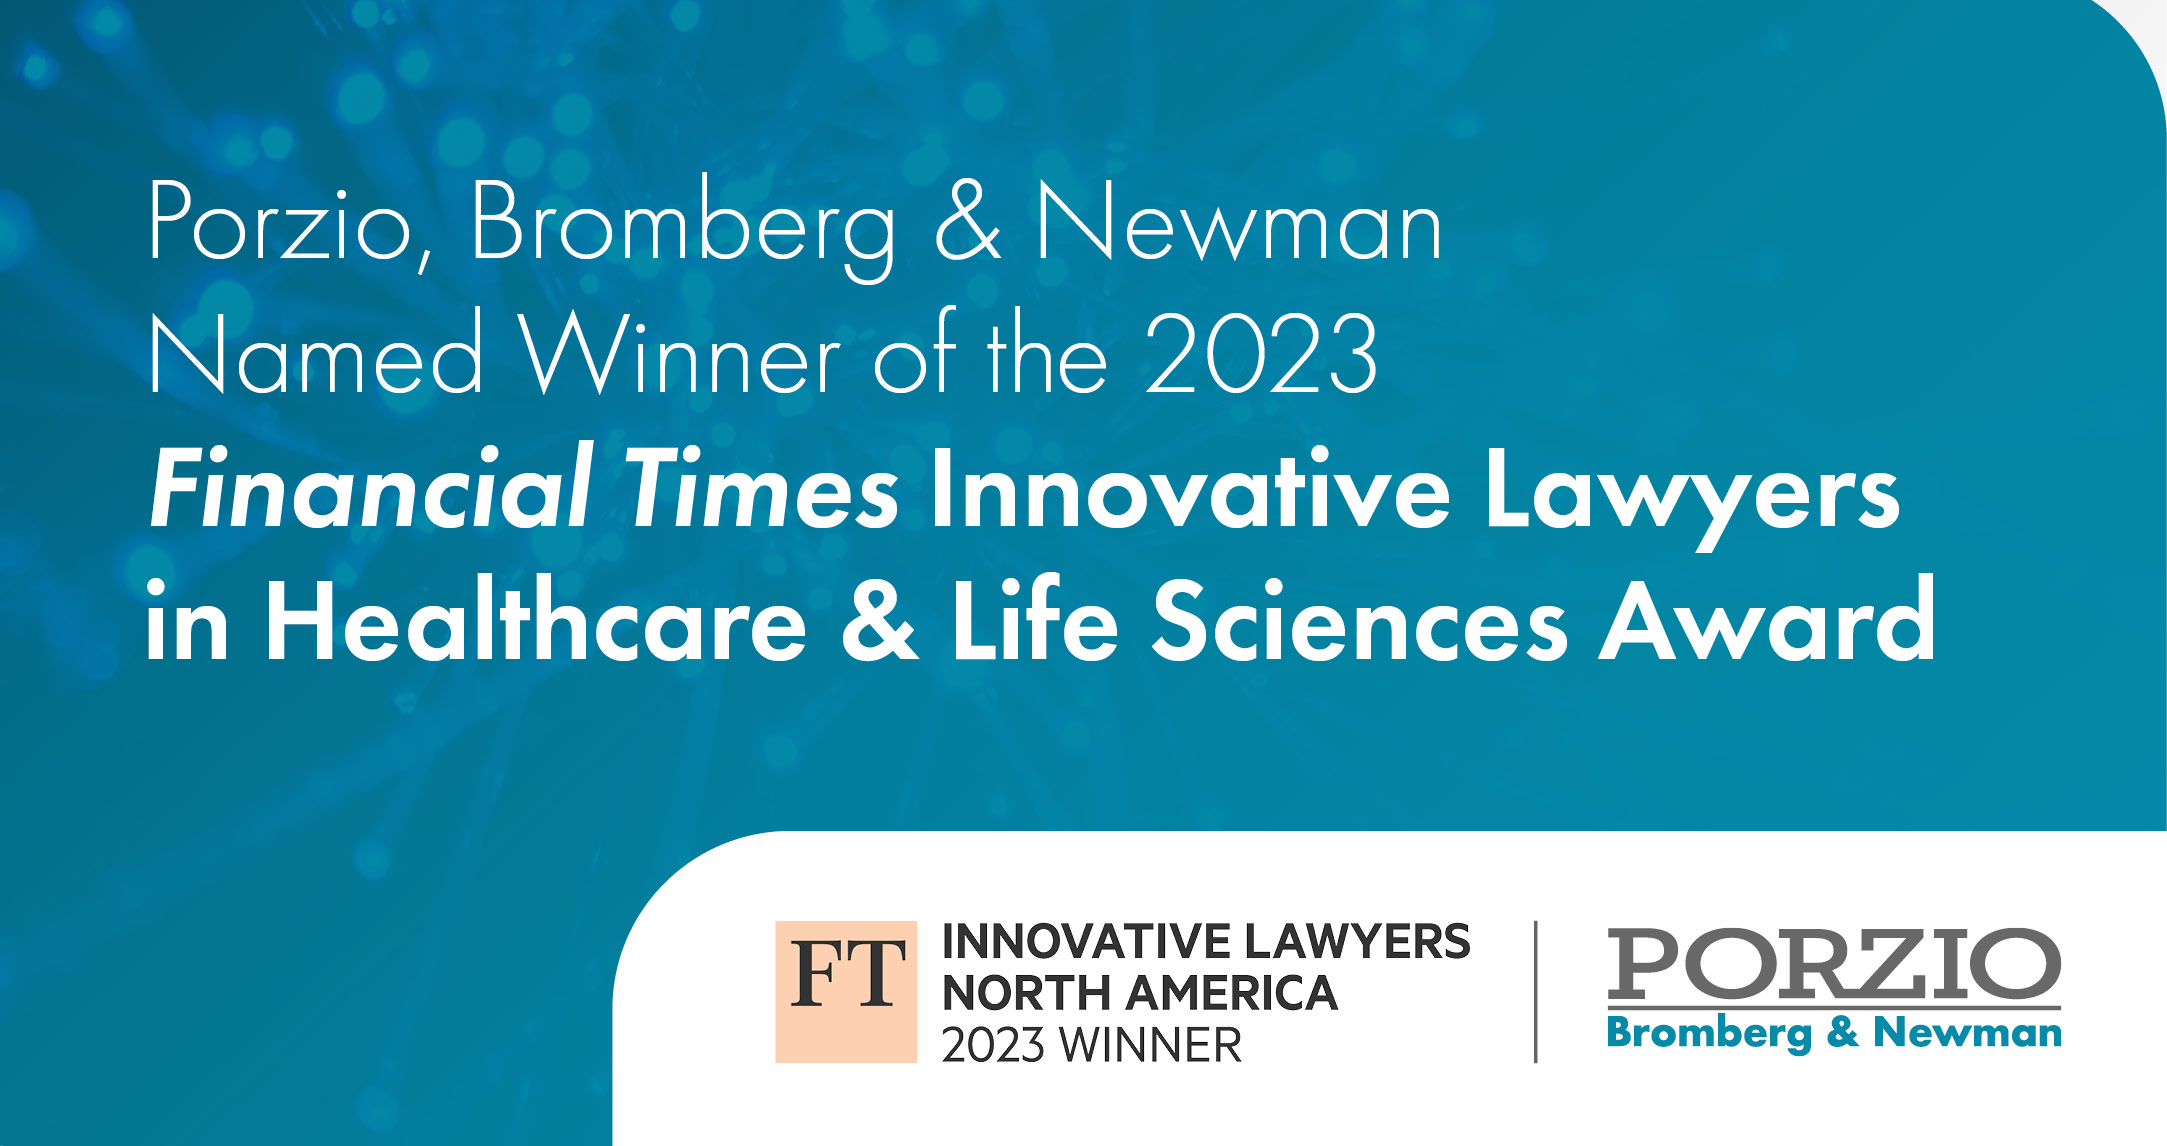 Porzio, Bromberg & Newman Named Winner of Financial Times Innovative